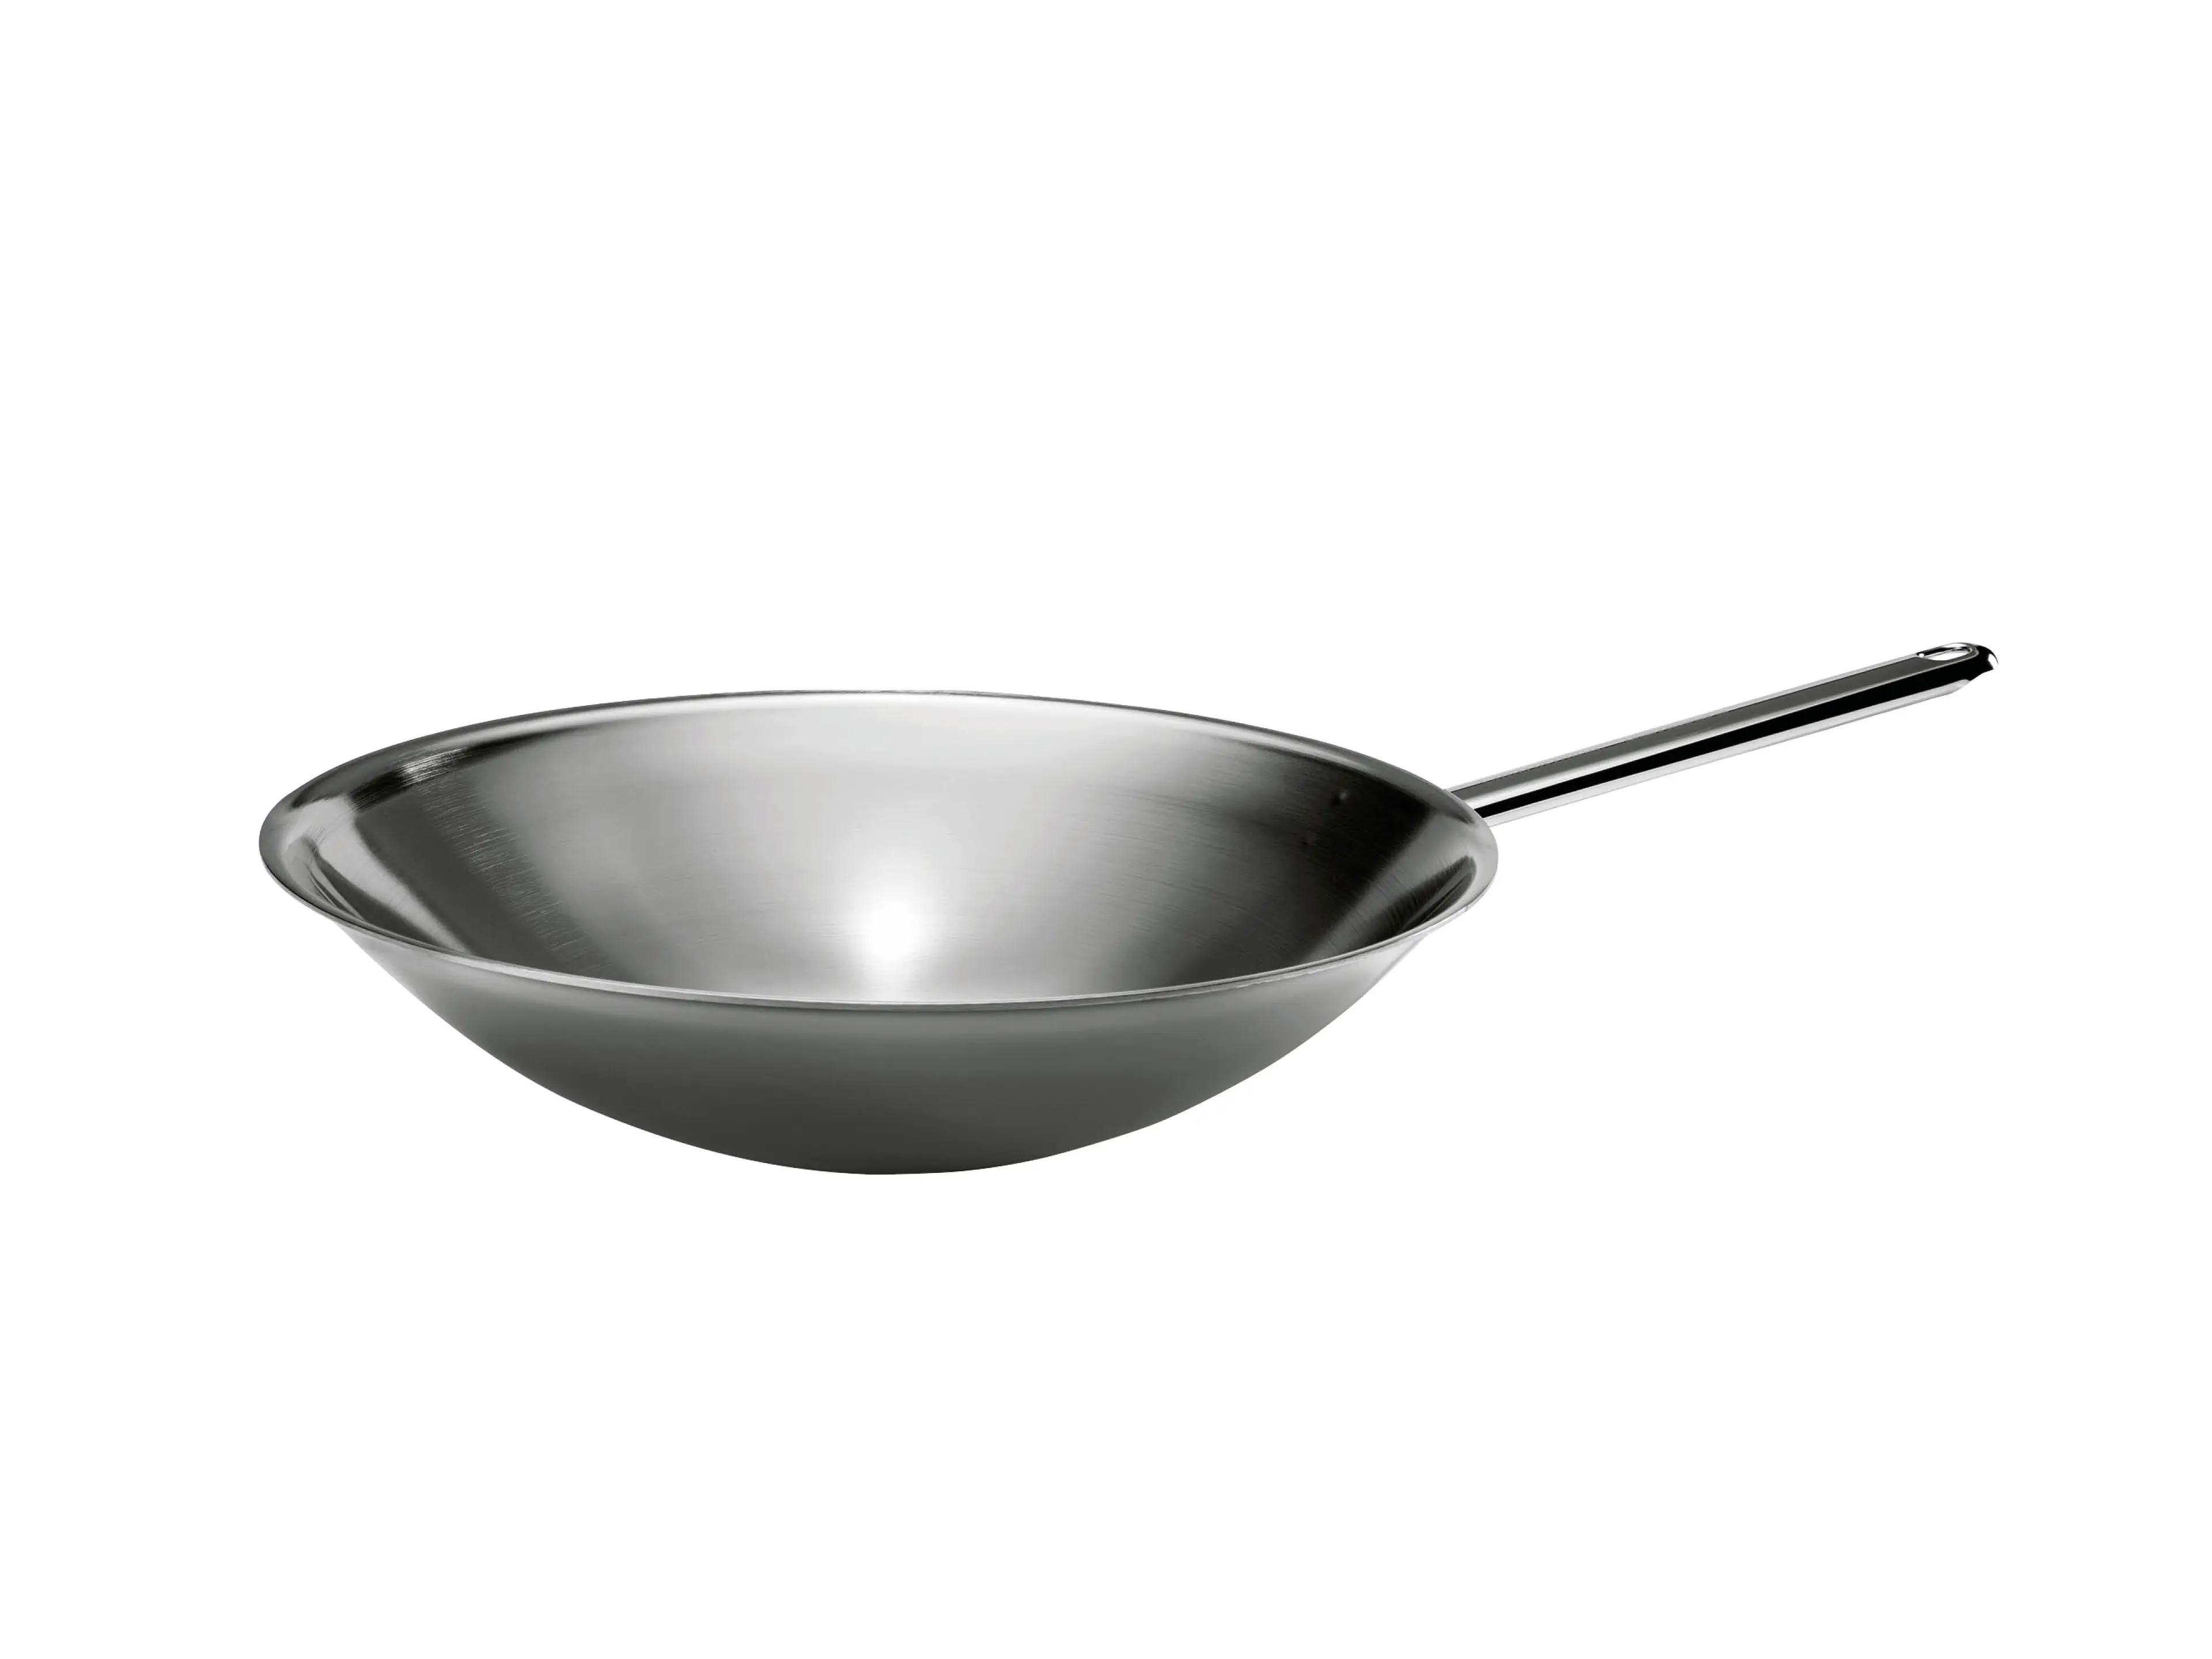 Induction wok pan